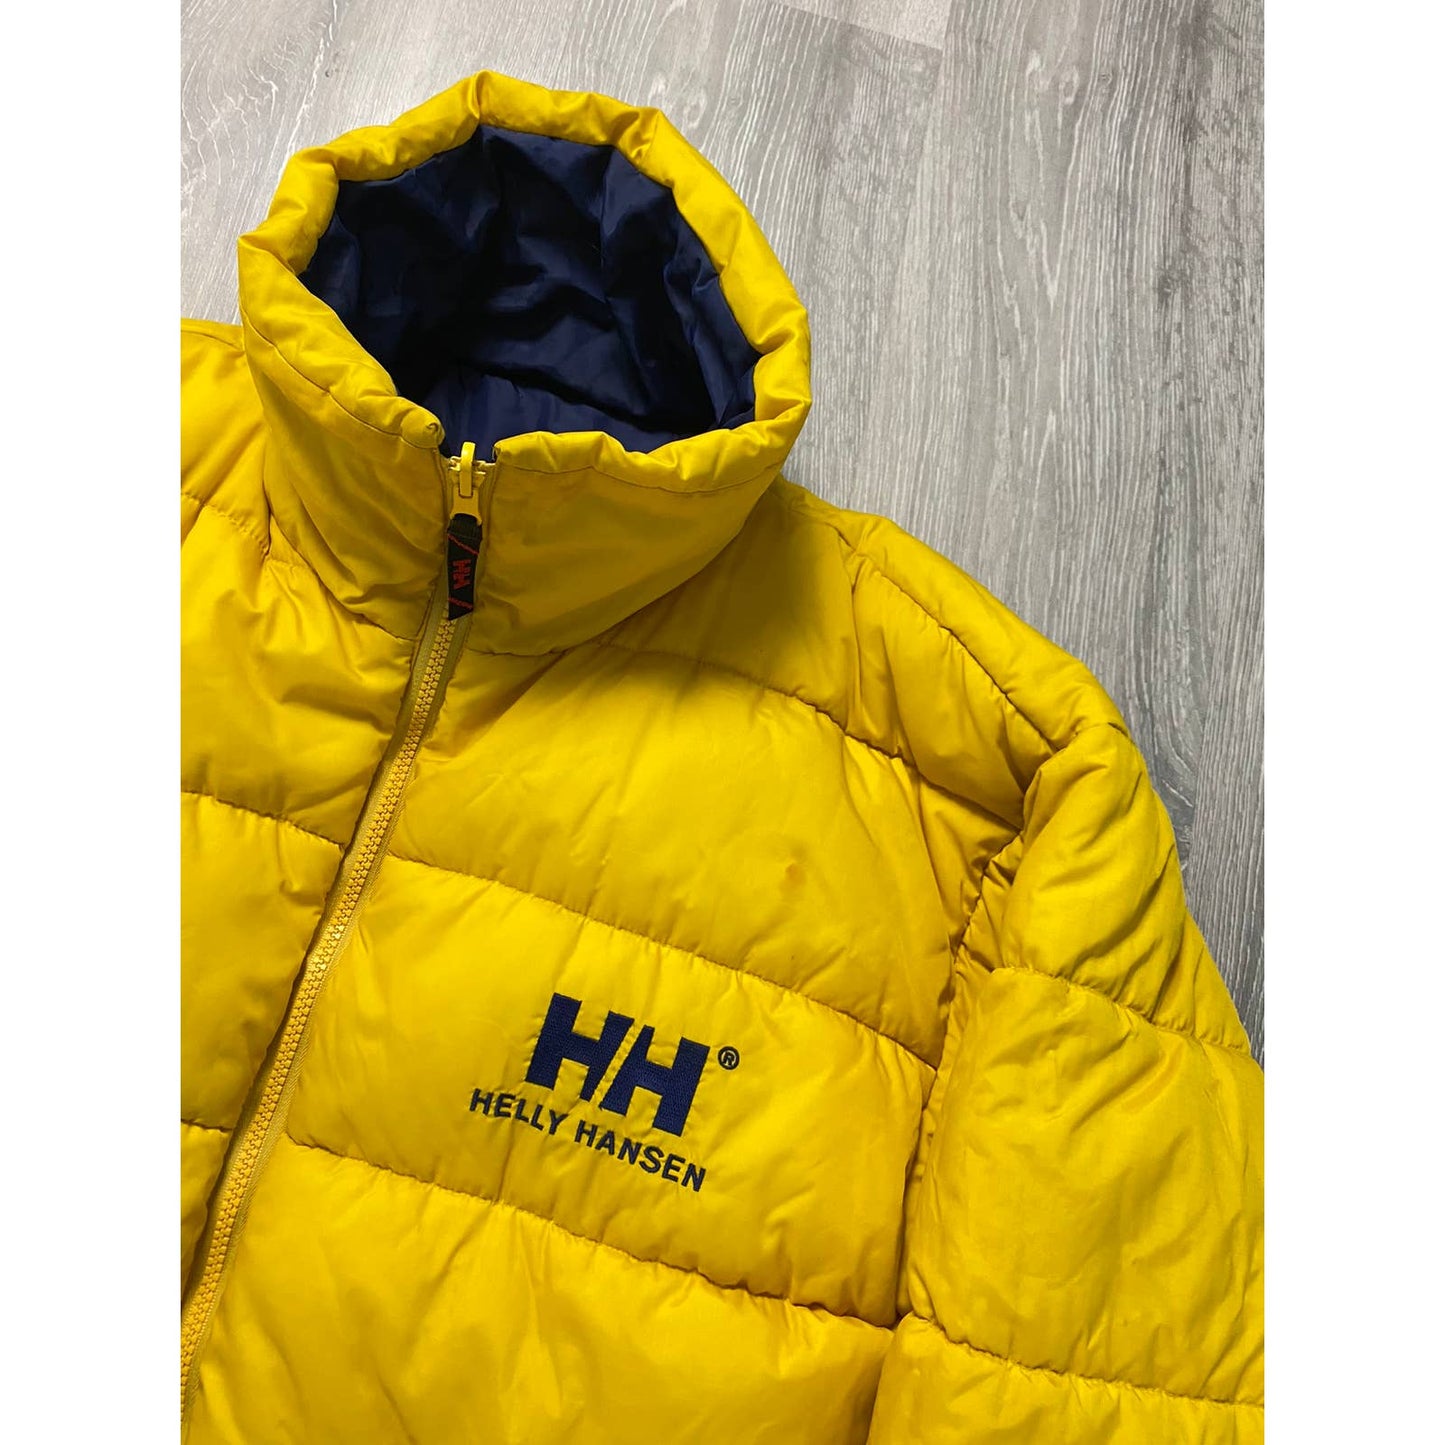 Helly Hansen vintage reversible puffer jacket big logo navy